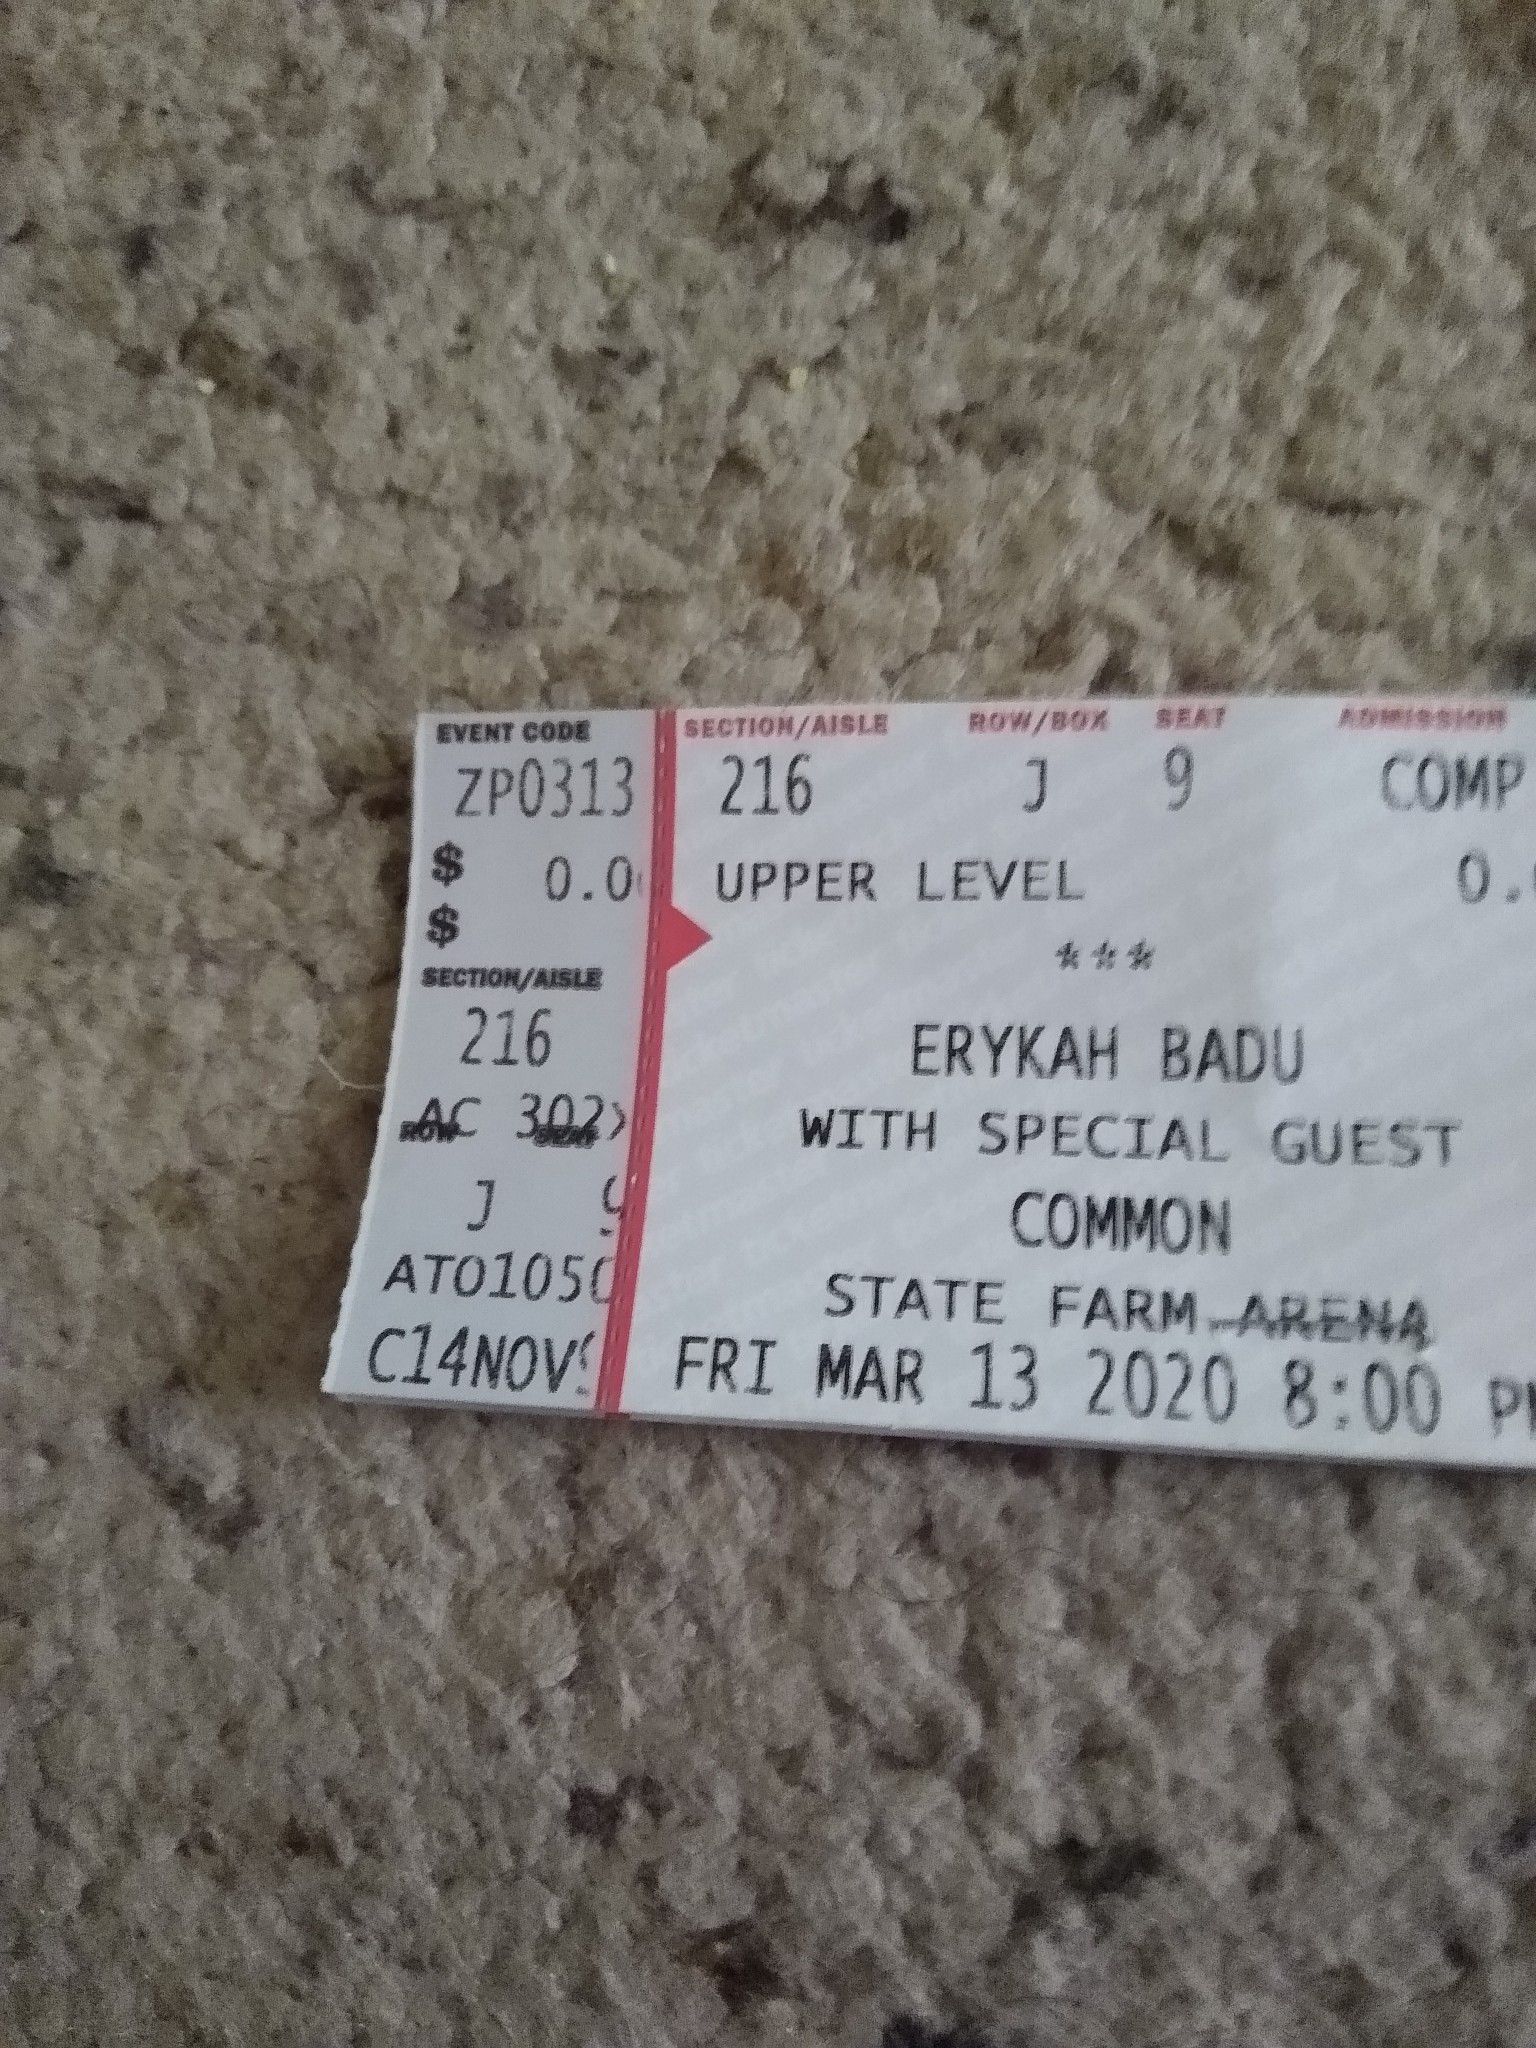 Erykah badu and common tickets